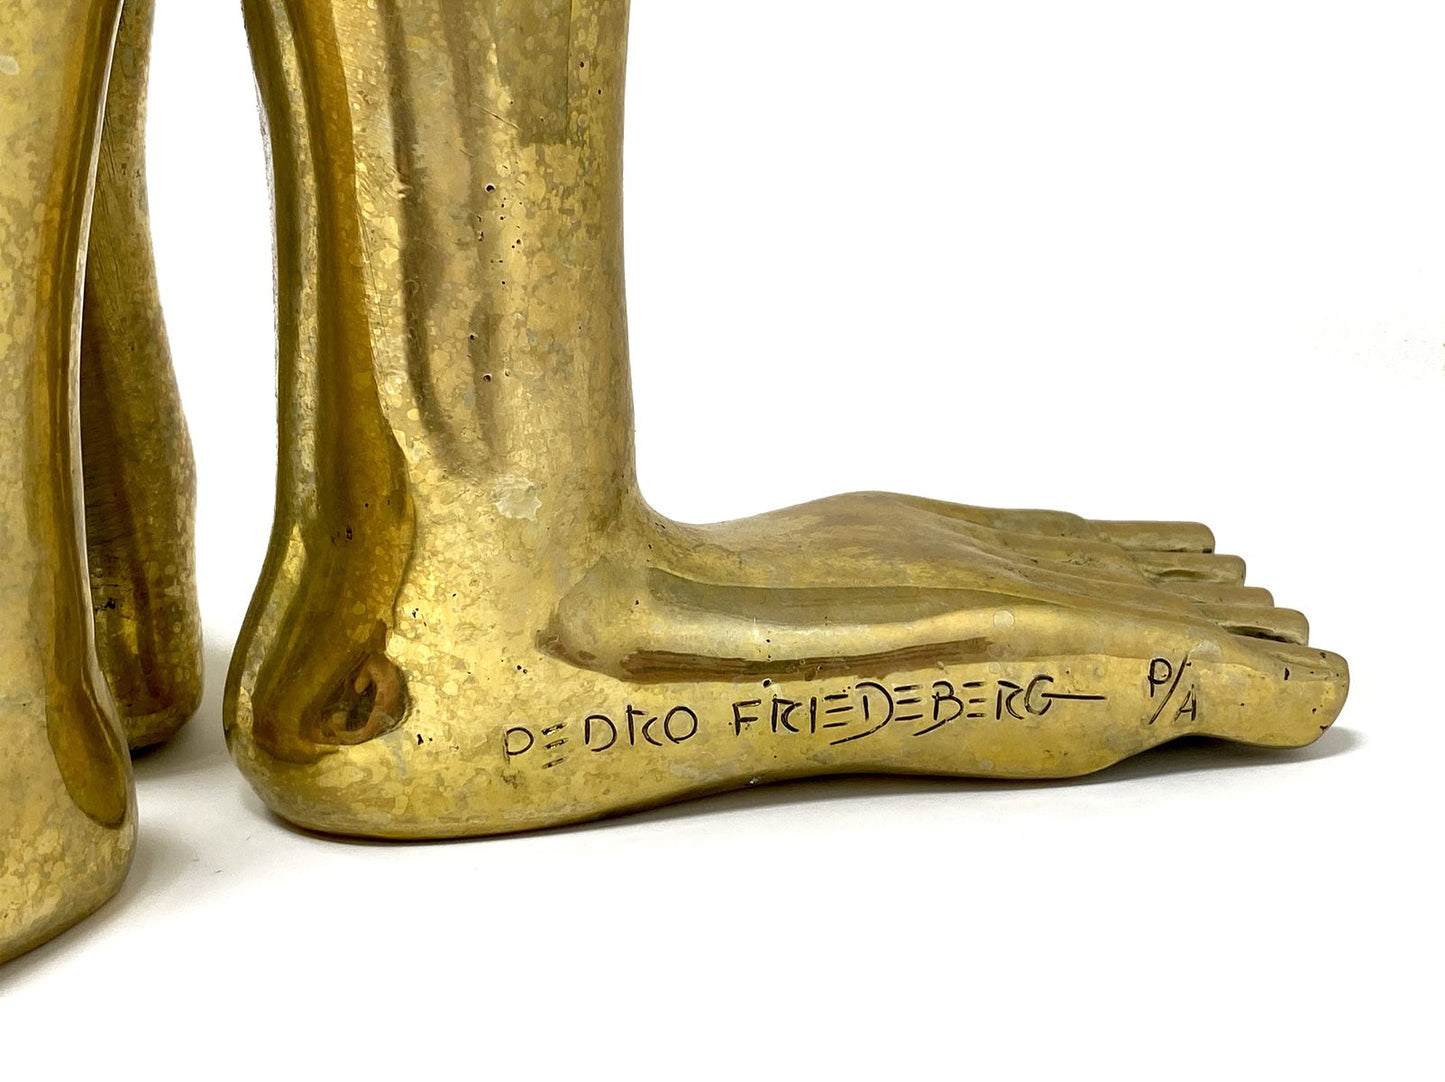 Bronze Hand Sculpture with Three Feet